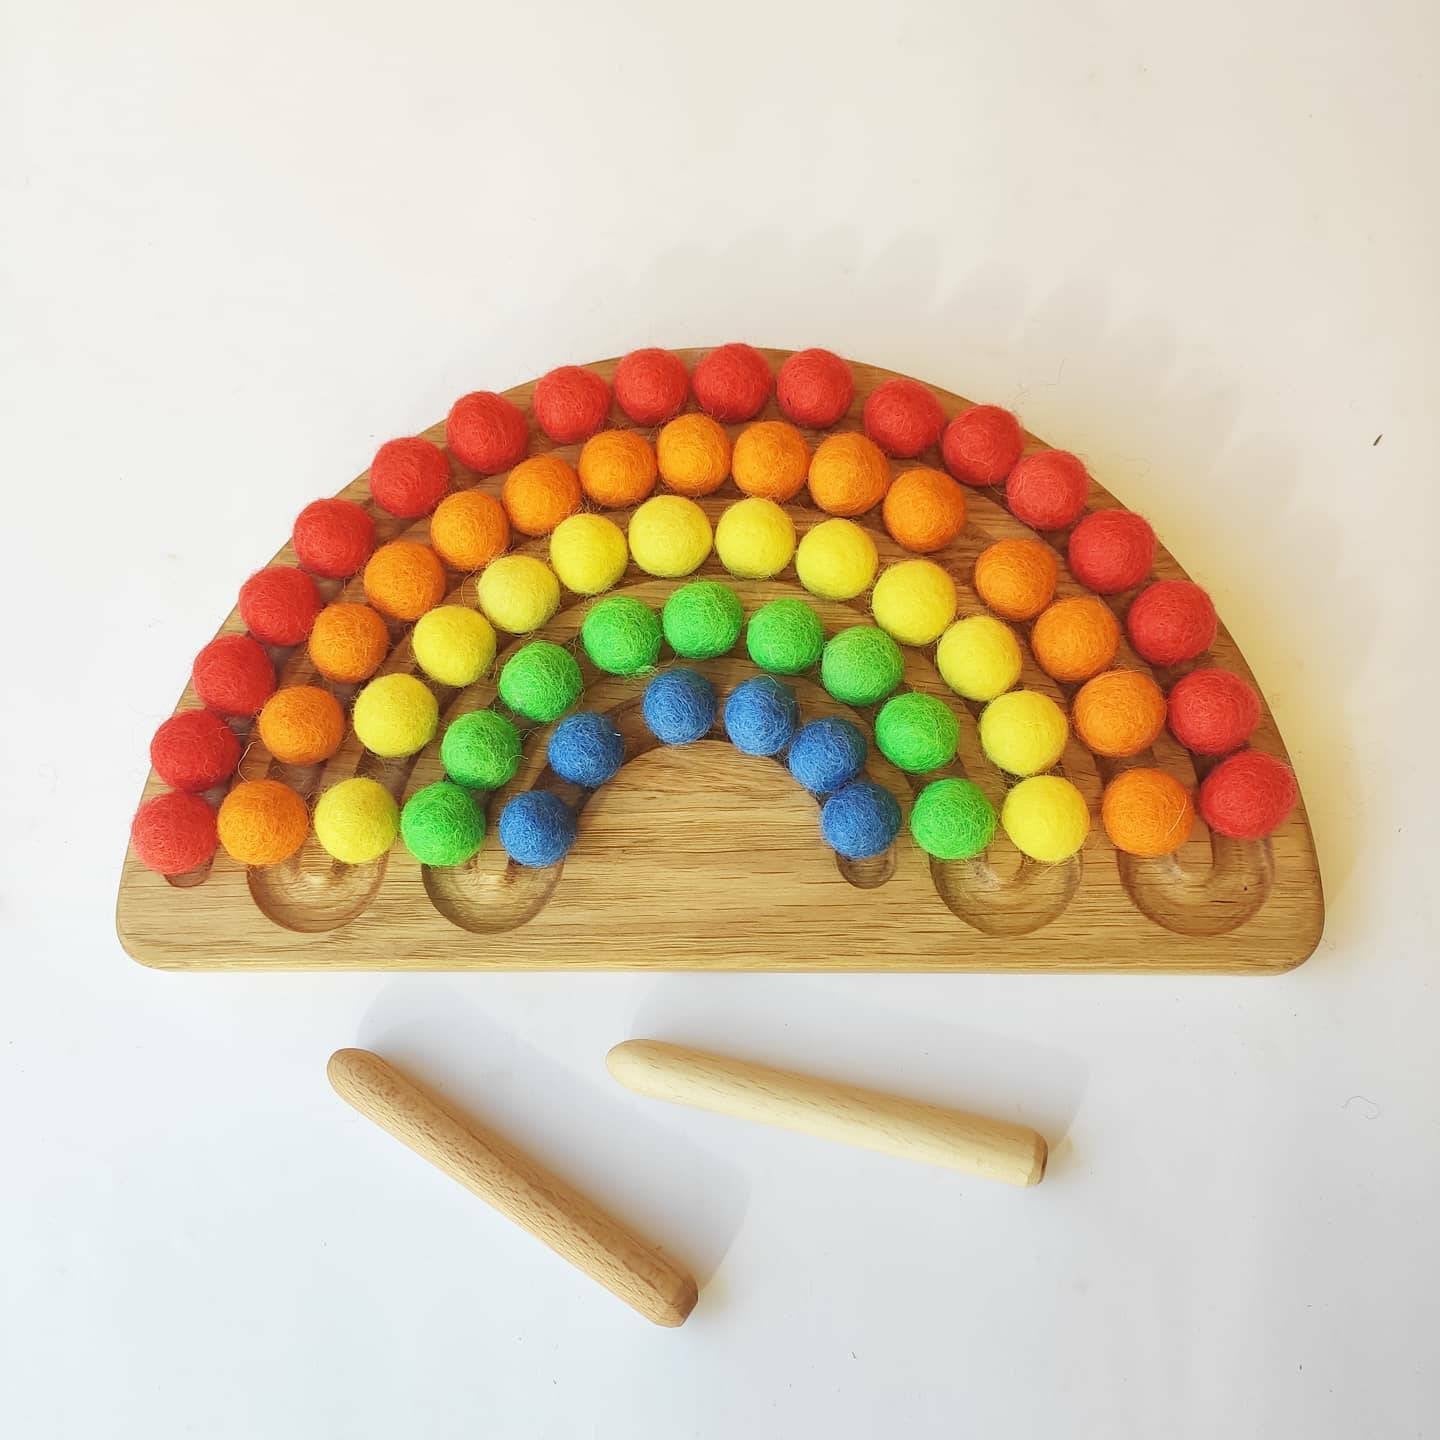 Rainbow board with 5 stripes,rainbow felt balls